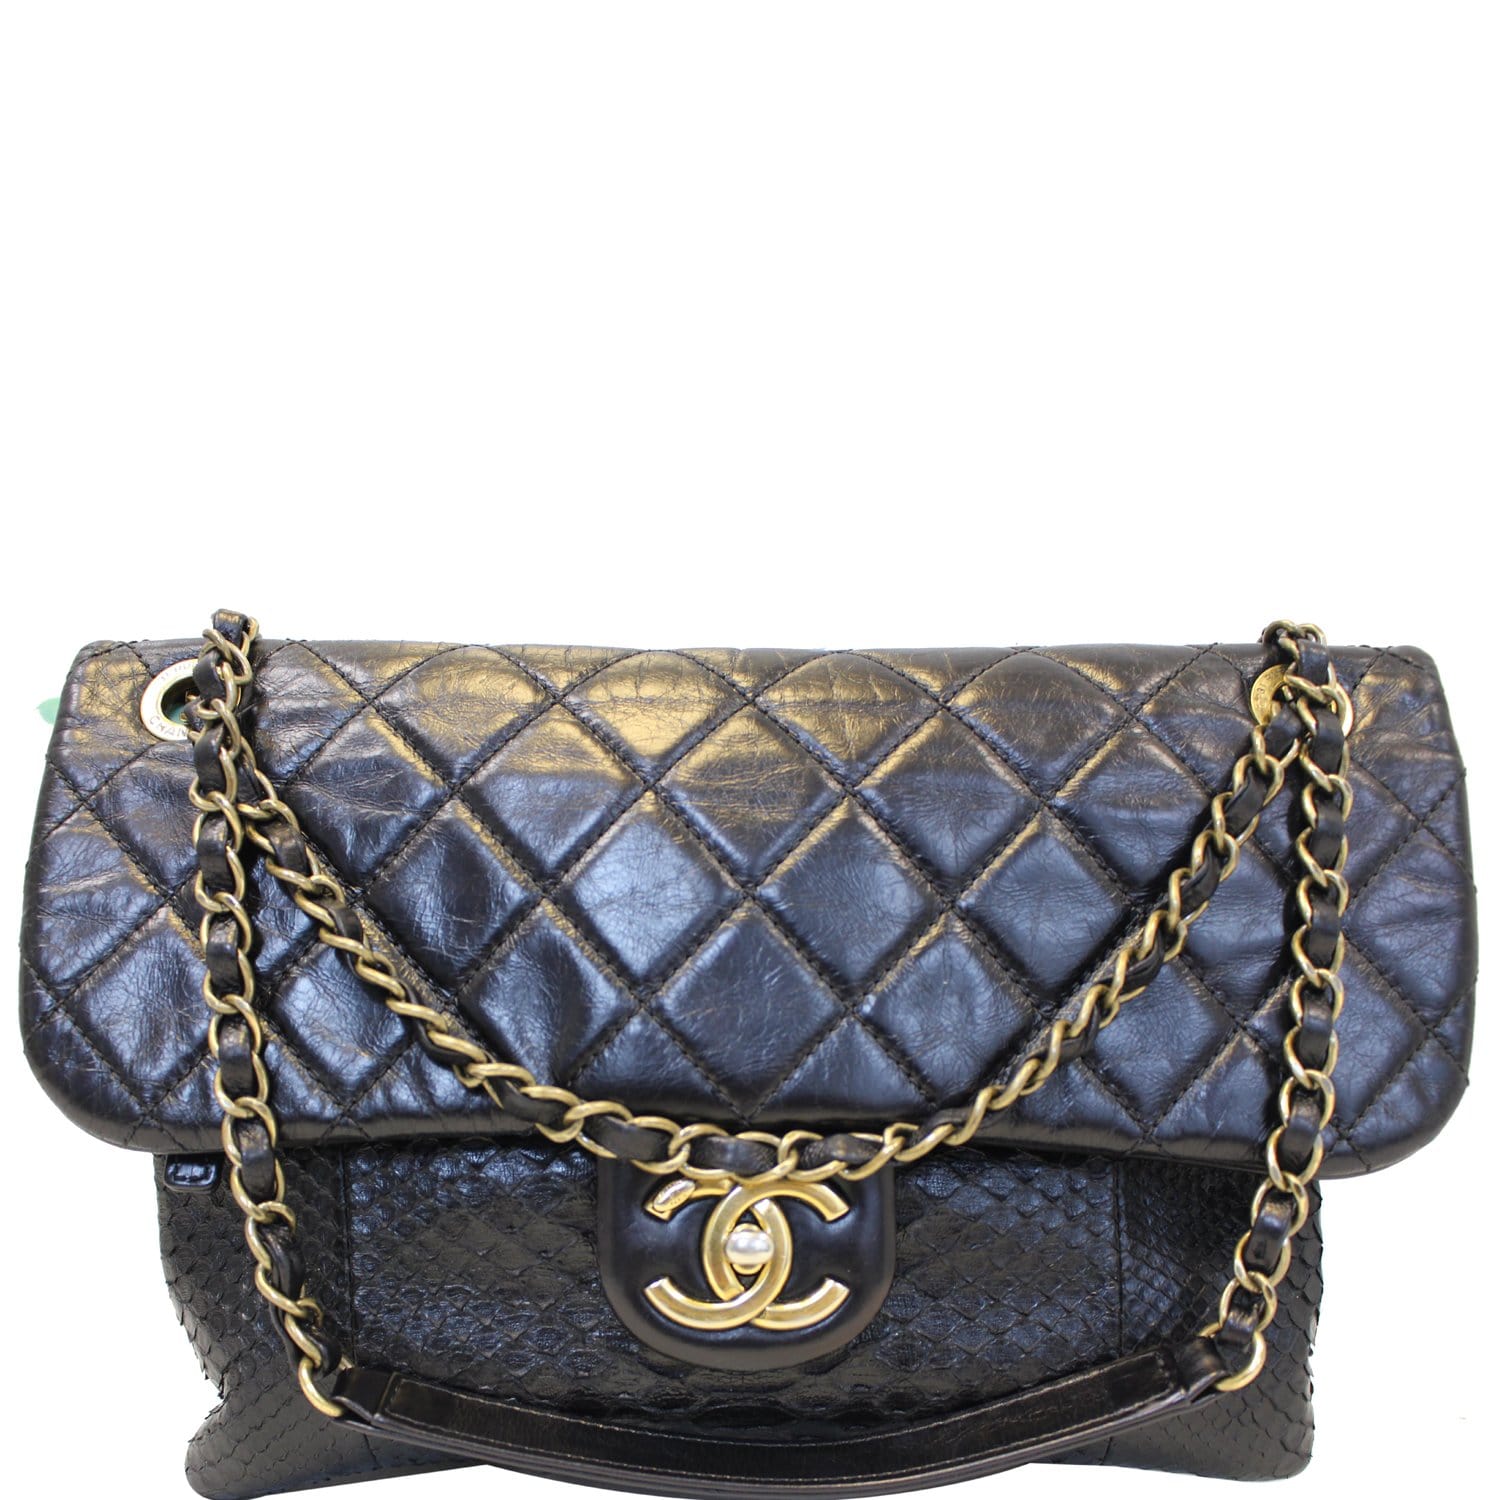 2016 Chanel Urban Mix Flap Black Quilted Leather Shoulder Bag For